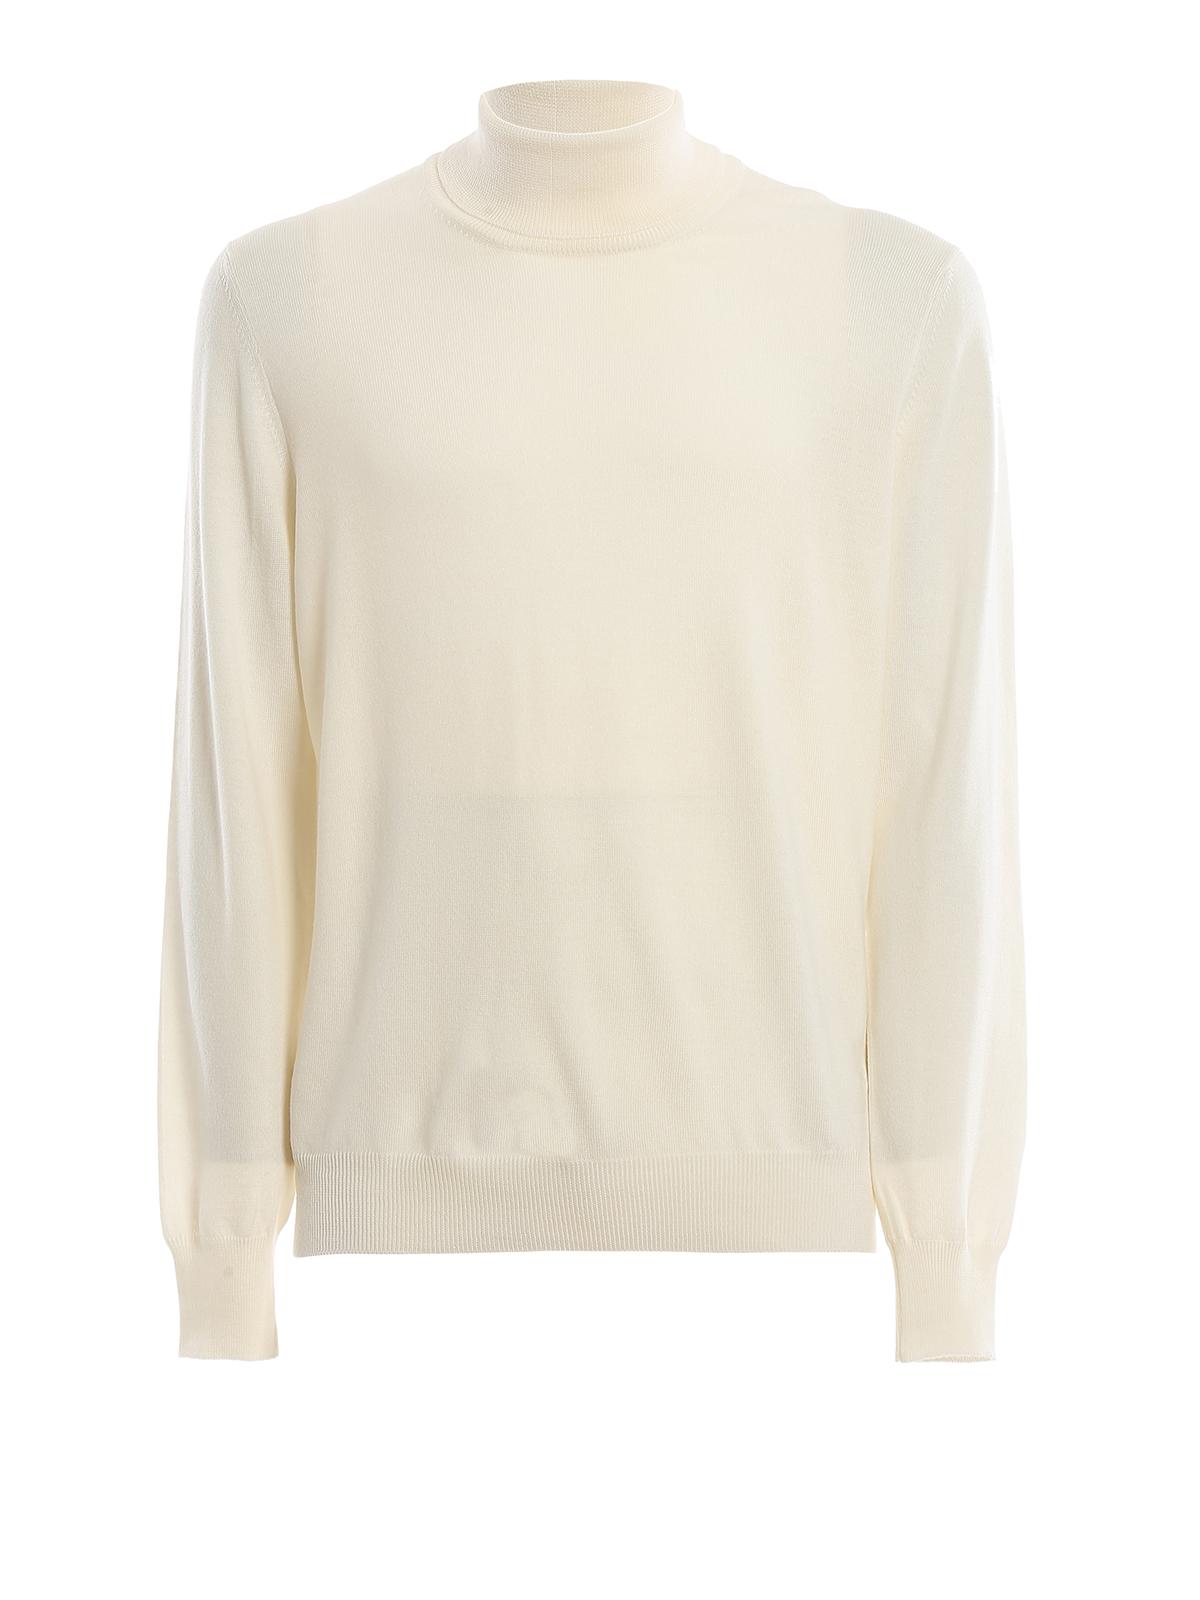 Fay Wool Turtleneck Sweater in White for Men - Lyst